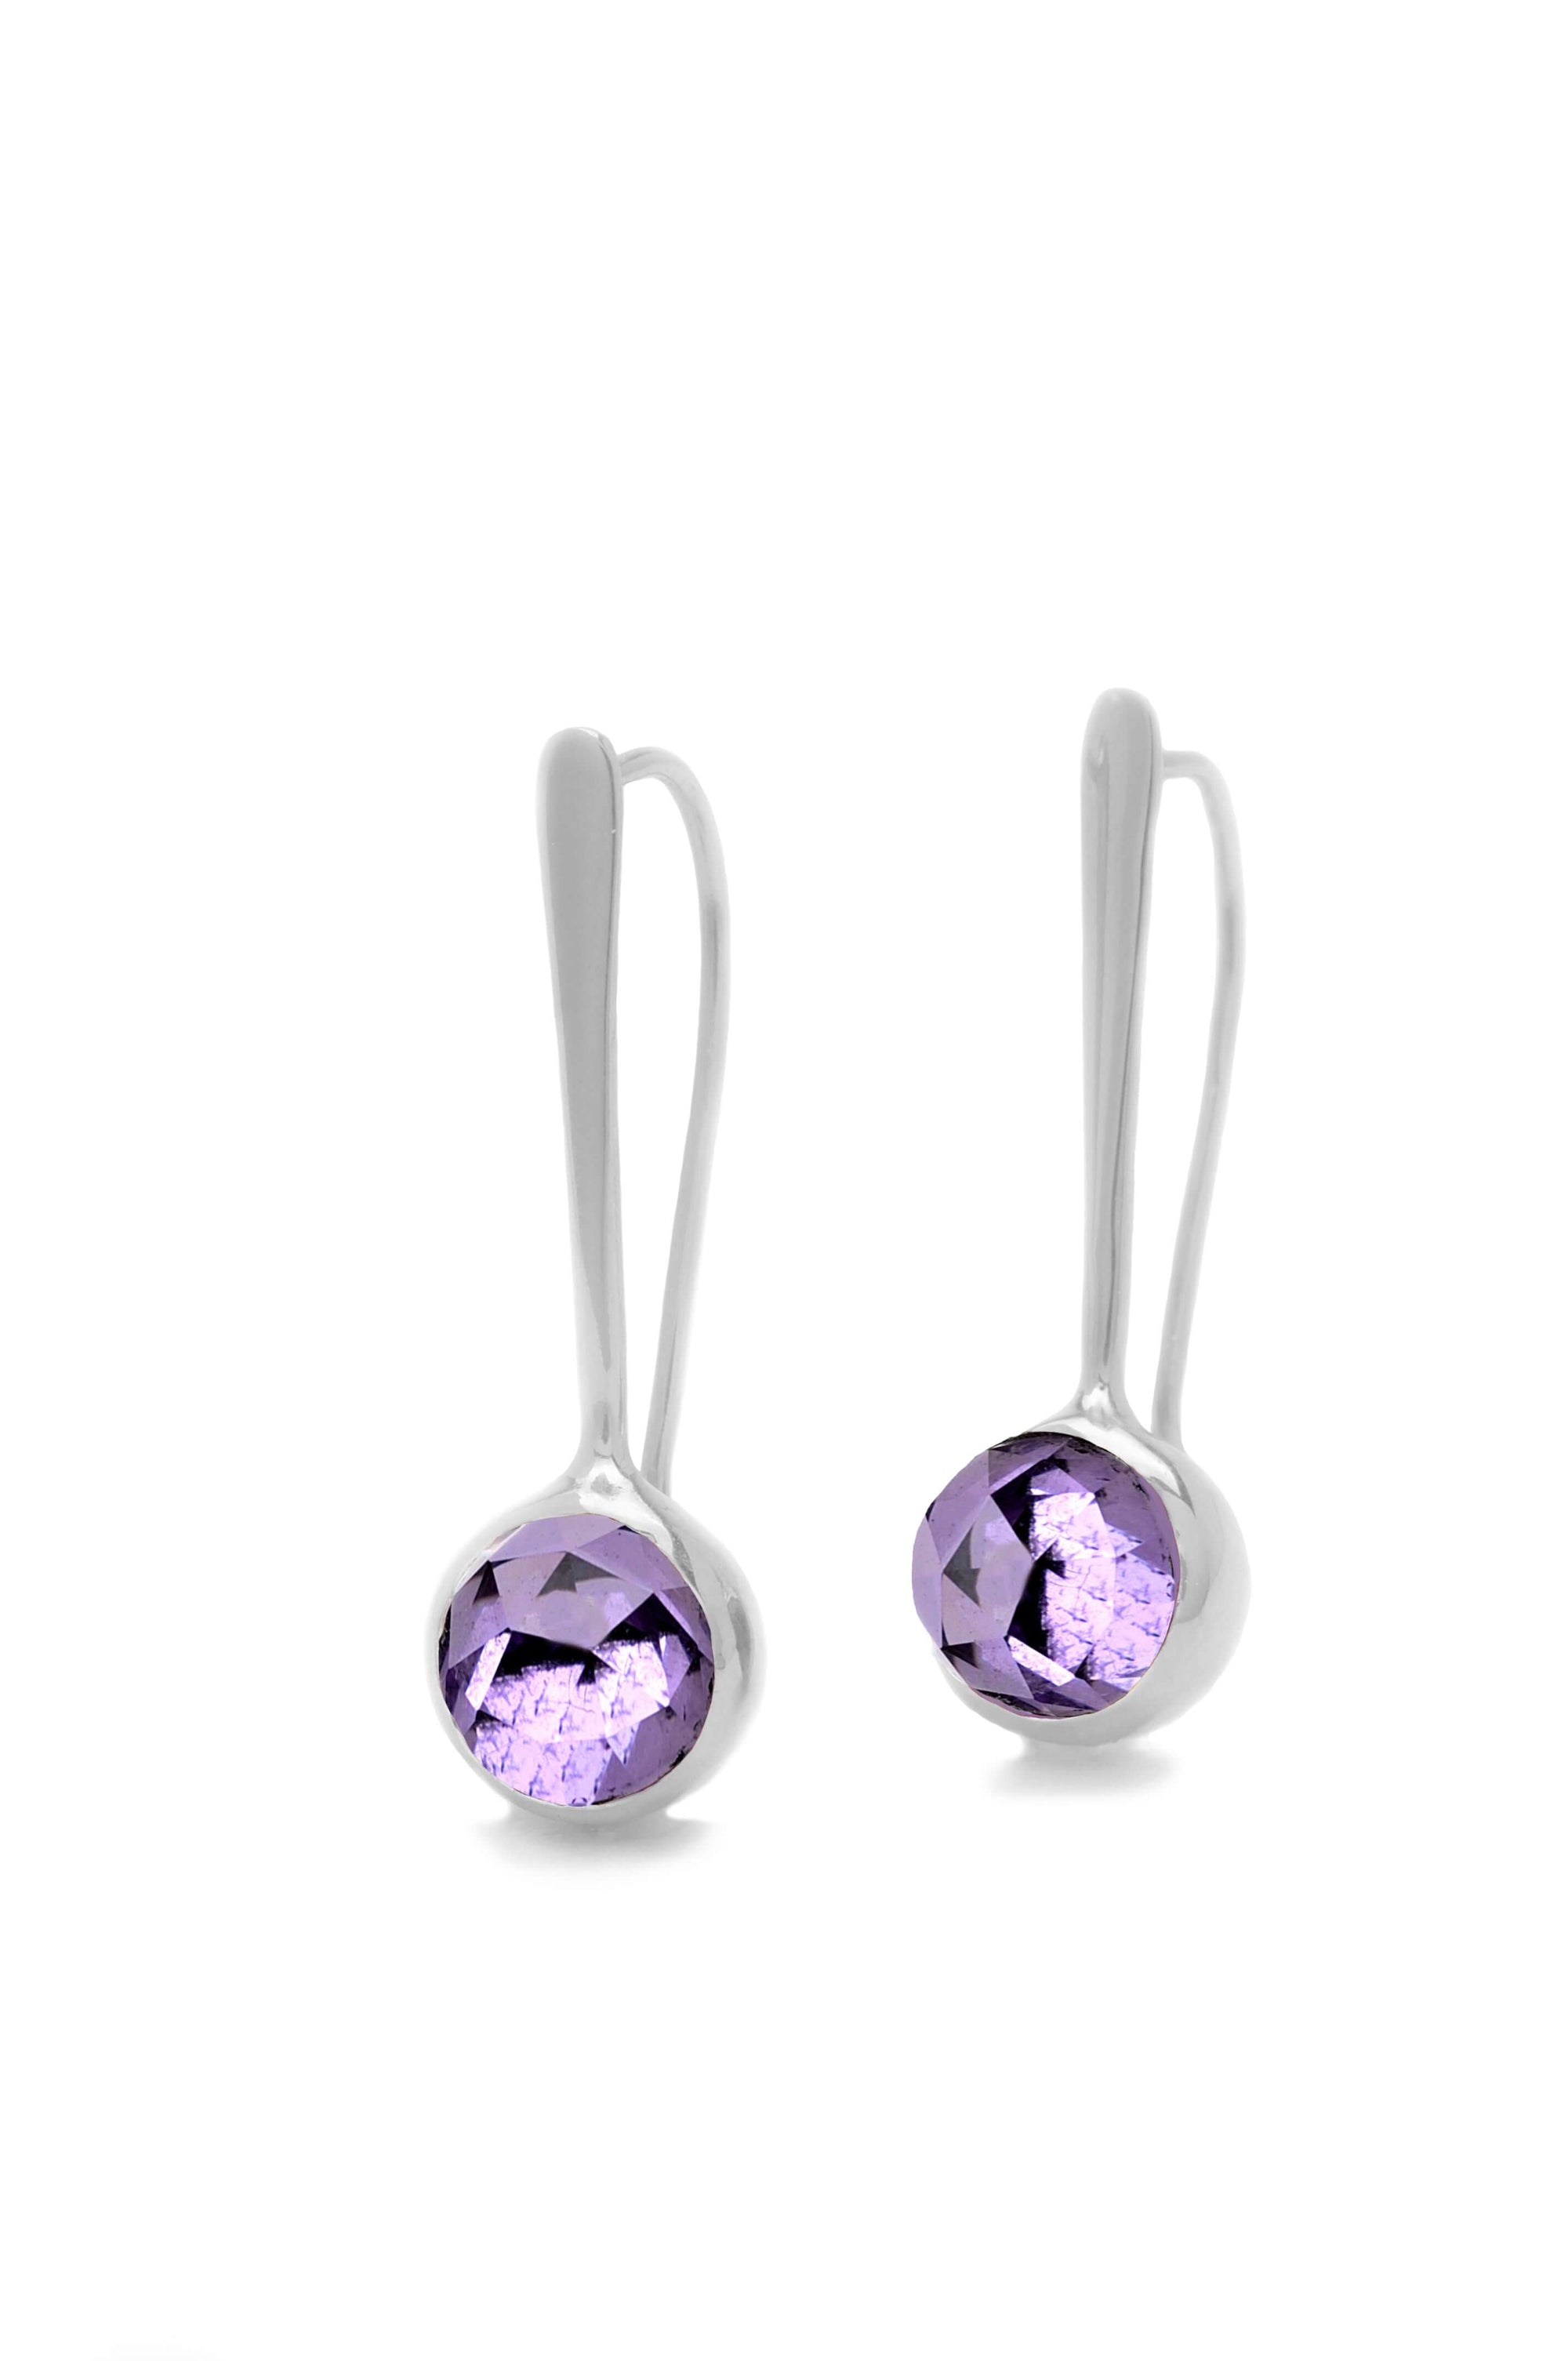 Sterling silver and rose cut amethyst earrings